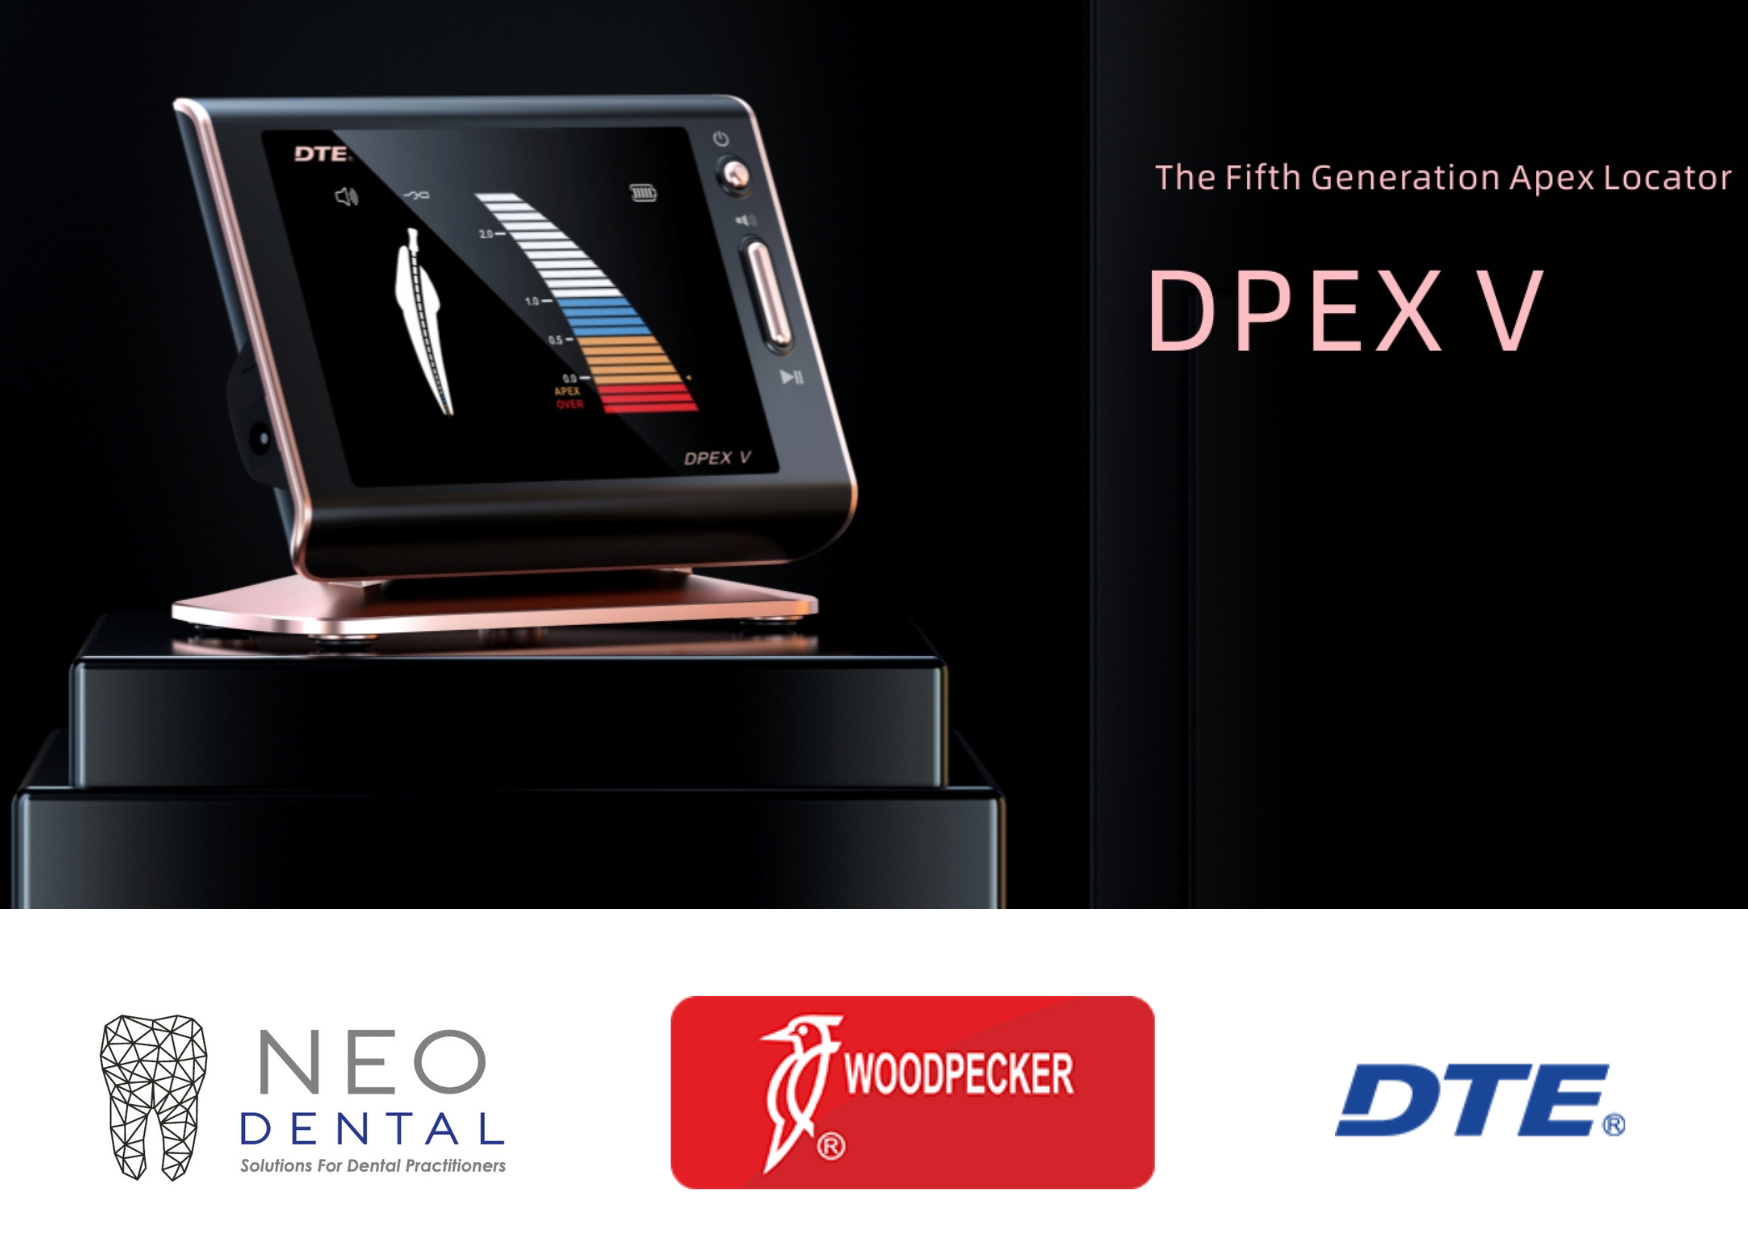 DPEX V by DTE® Apex locator